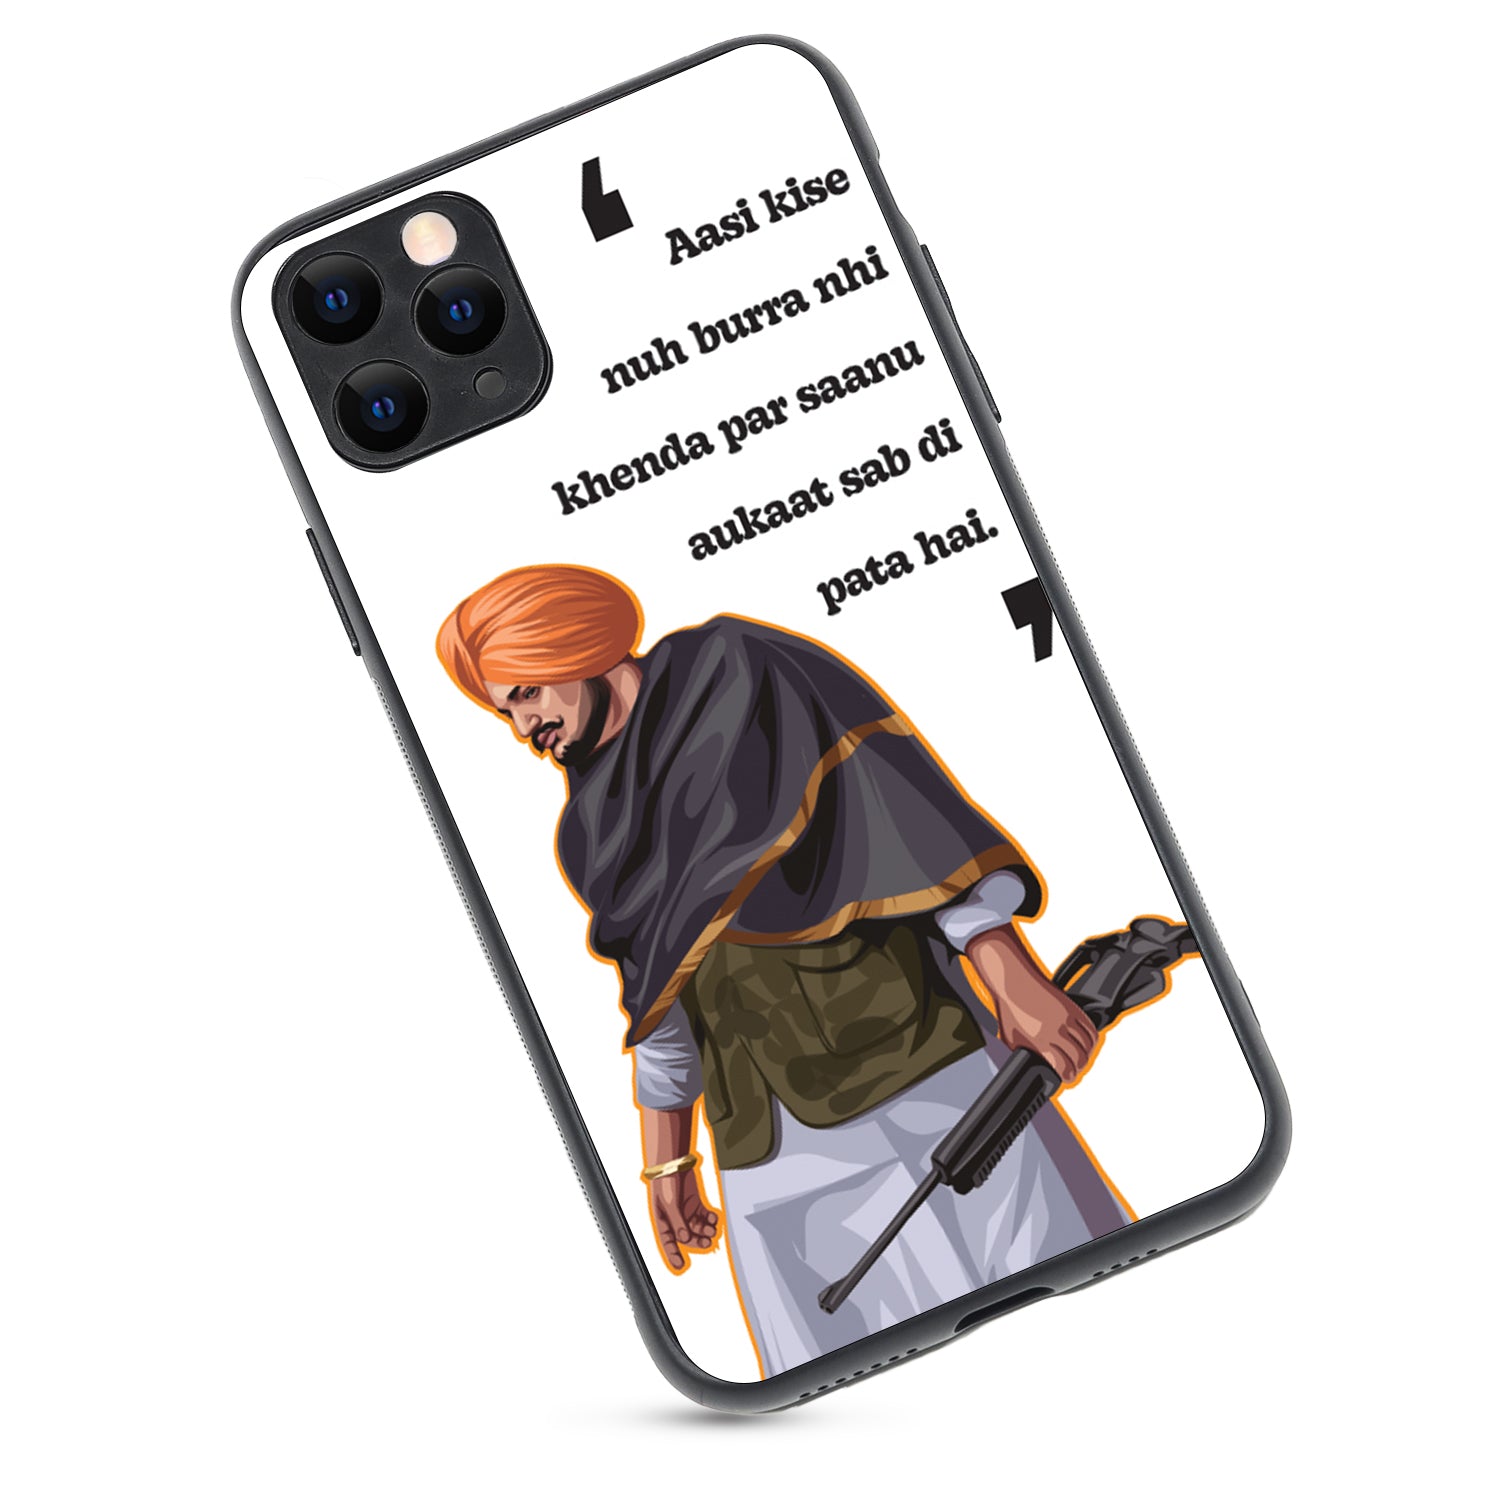 Attitude  Sidhu Moosewala iPhone 11 Pro Max Case